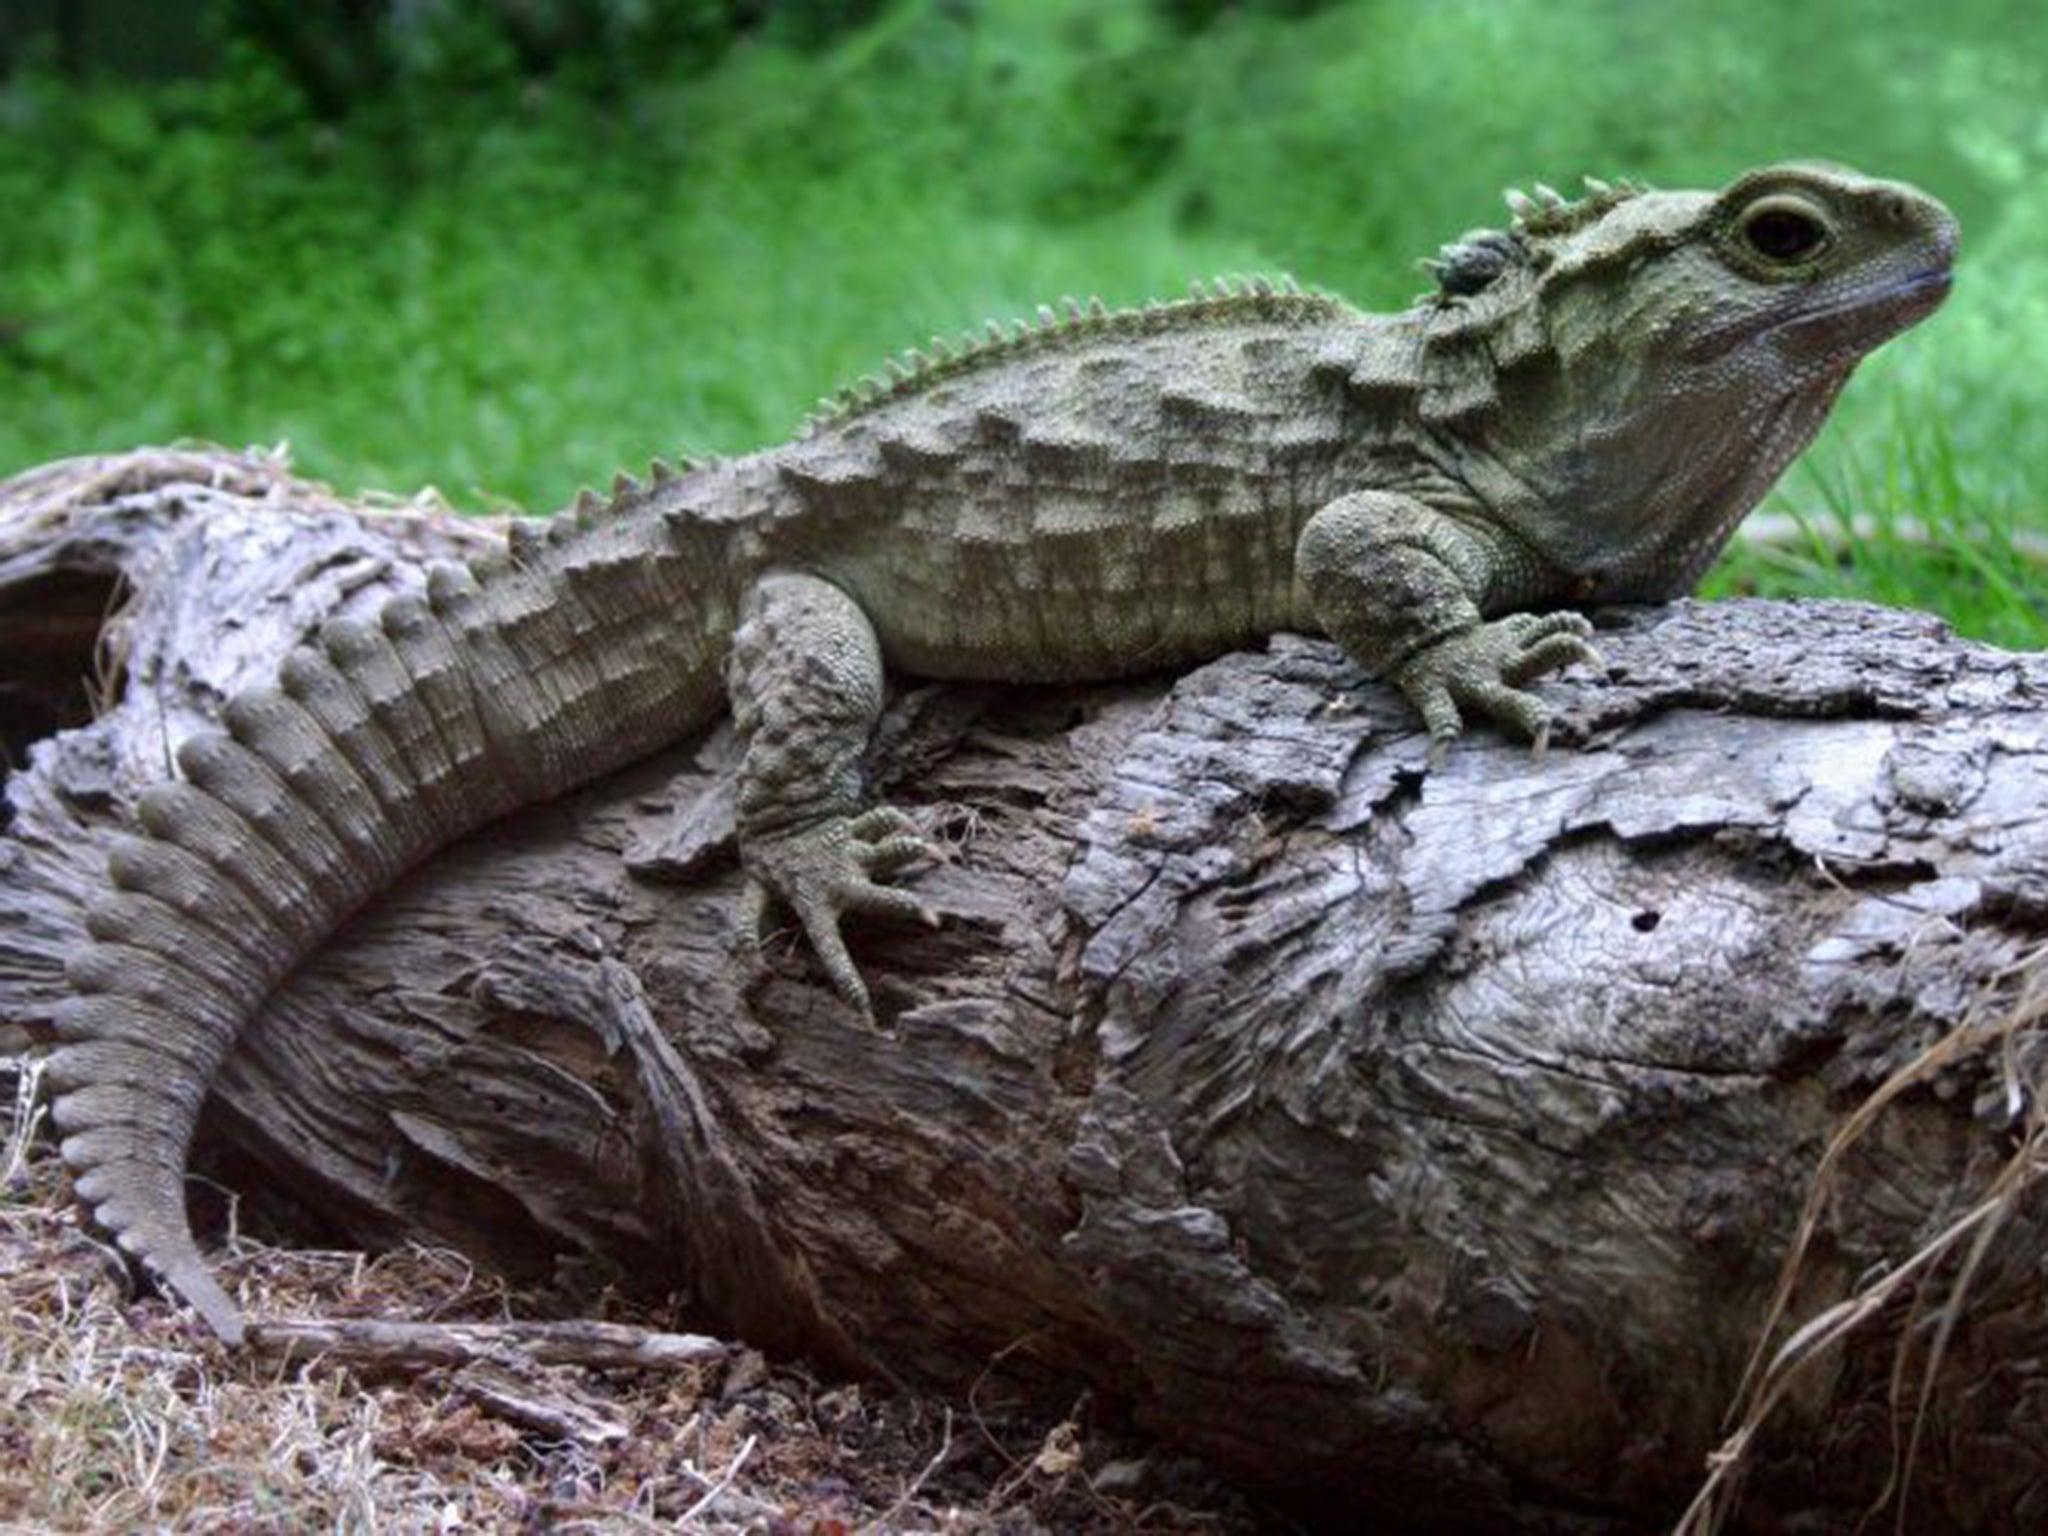 Tuatura: Lizard Like Reptile Takes 38 Years To Lay An Egg